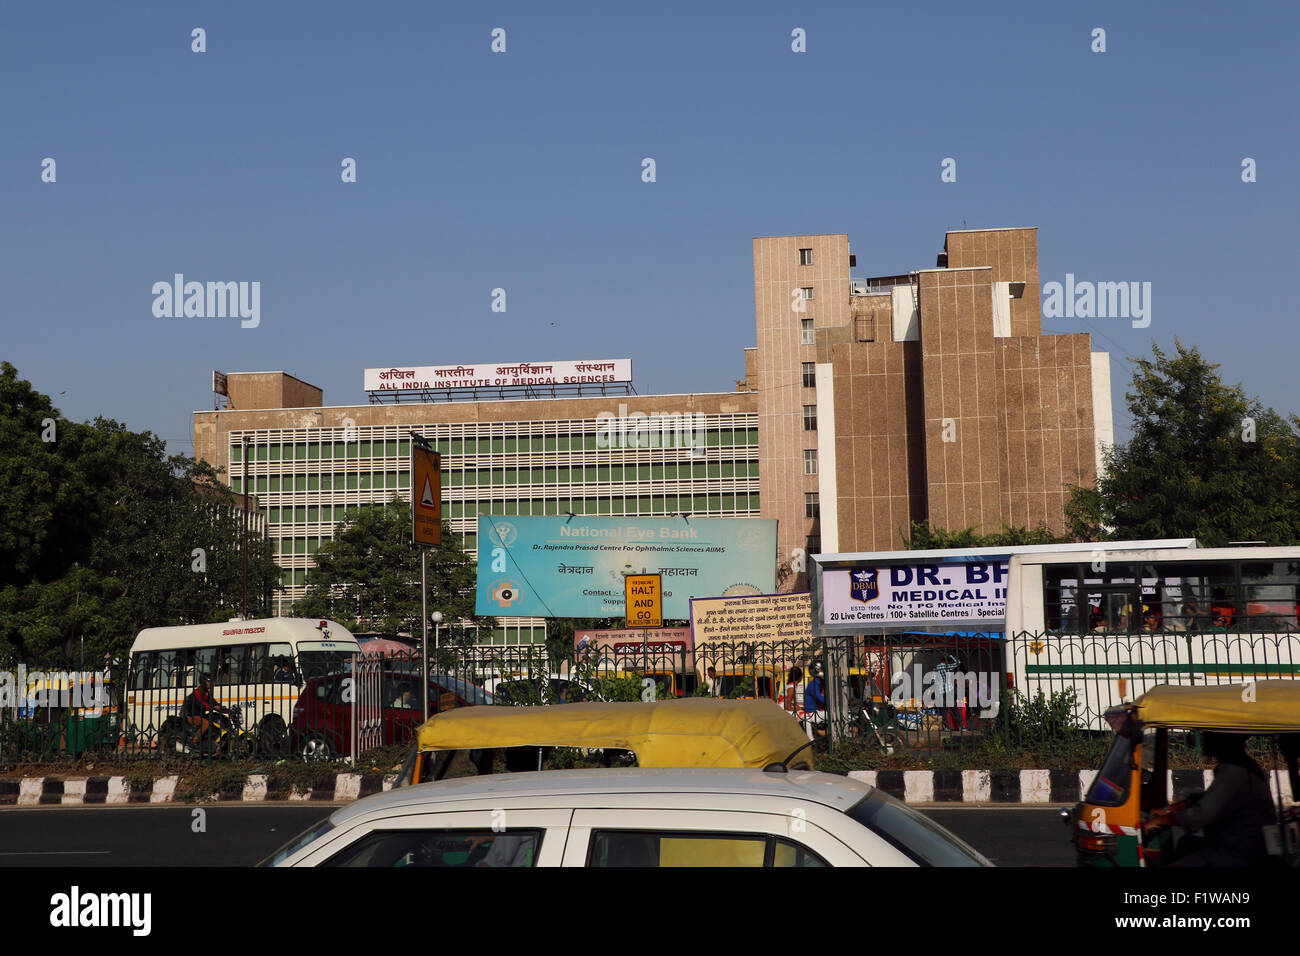 AIIMS - All India Institute of Medical Sciences Building, New Delhi Foto Stock